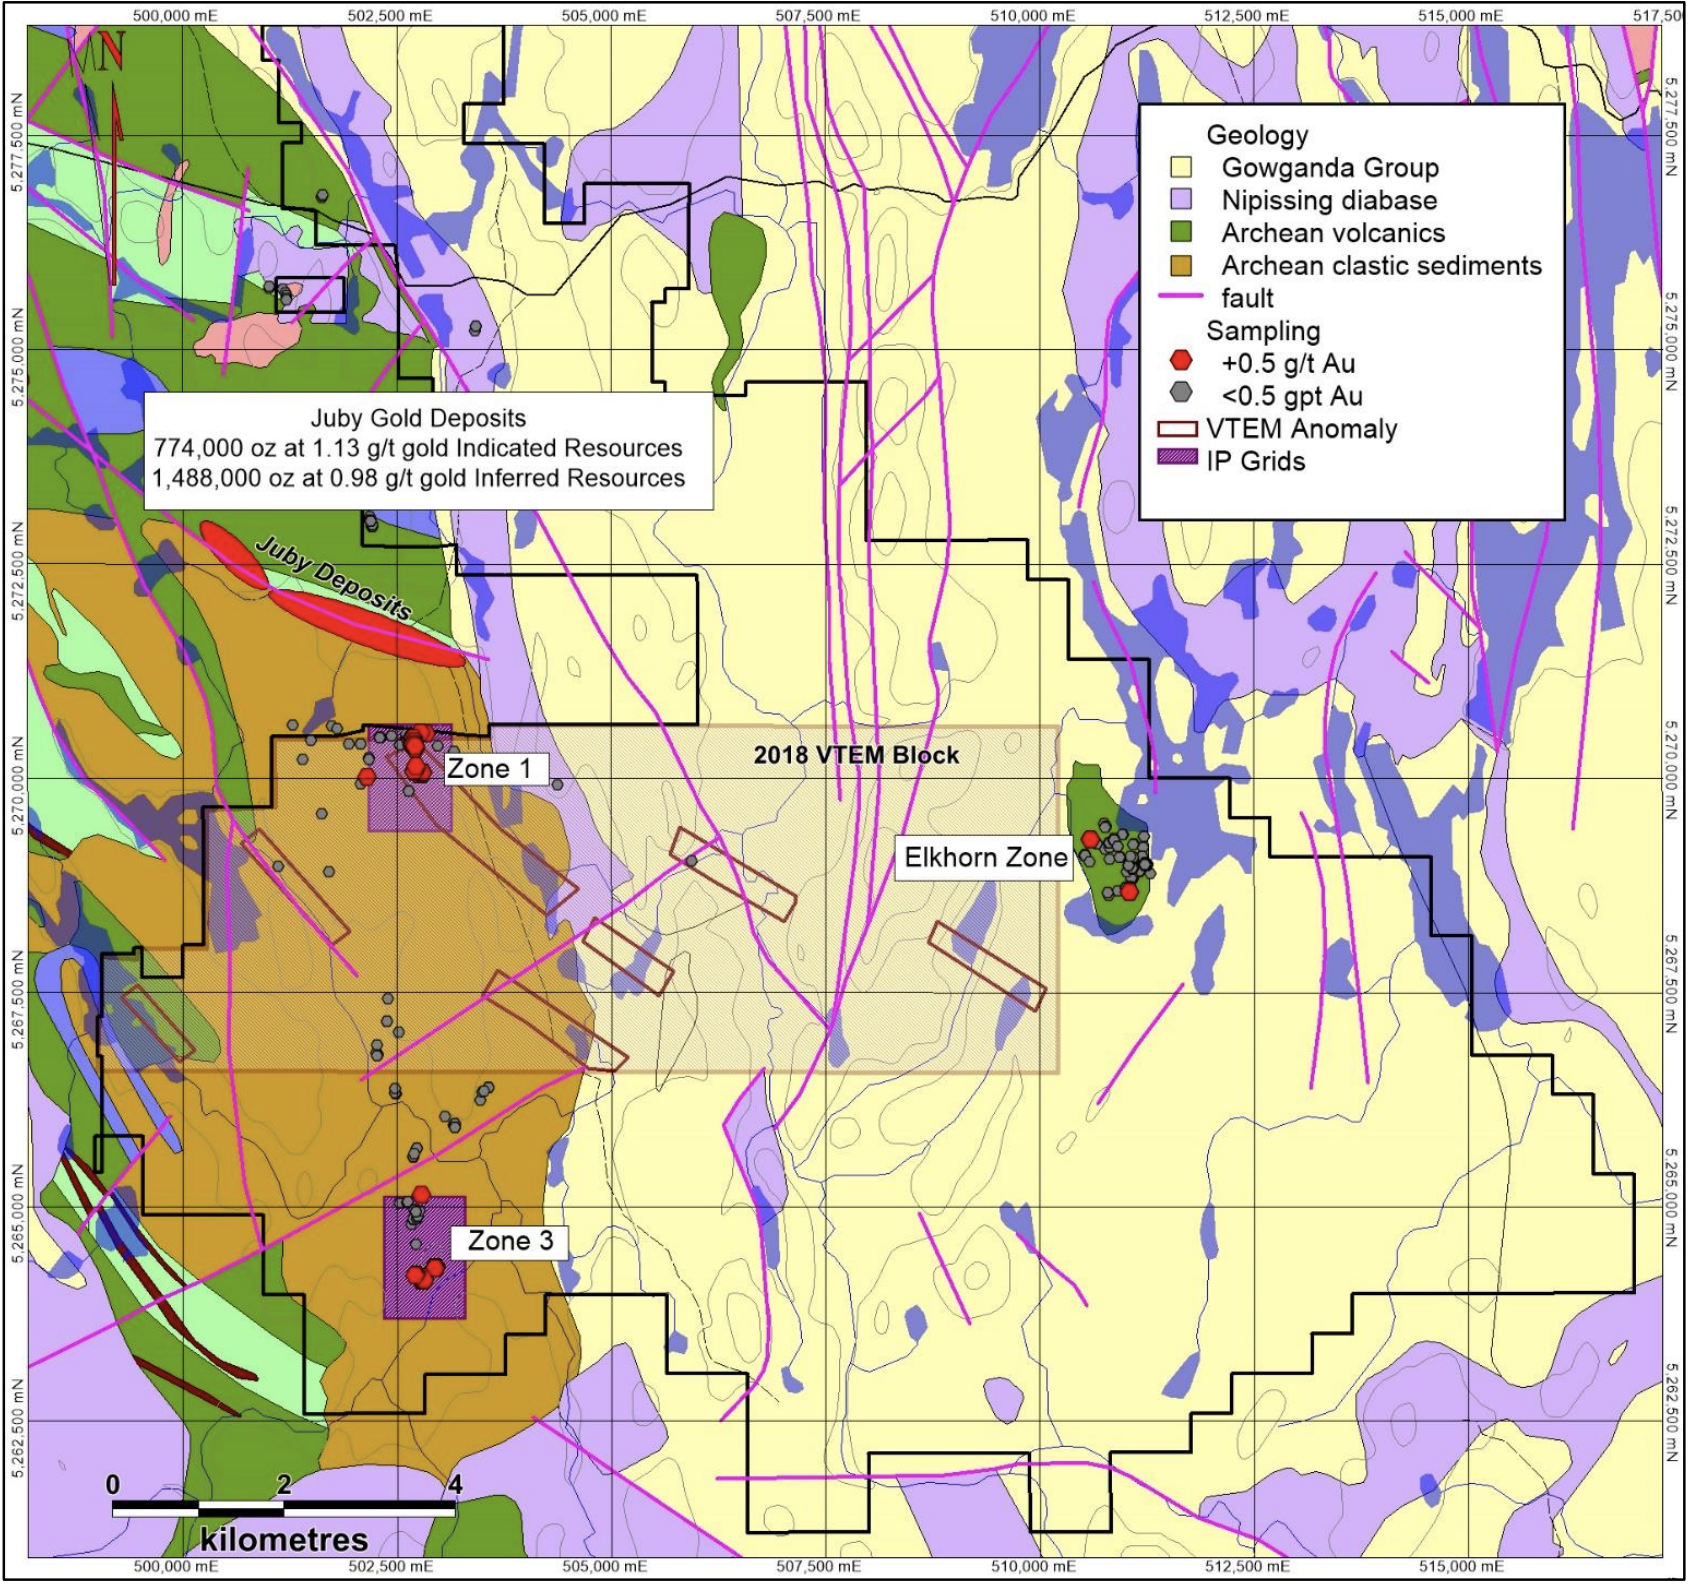 Figure 1. Gowganda West Geology, Zones and Sampling